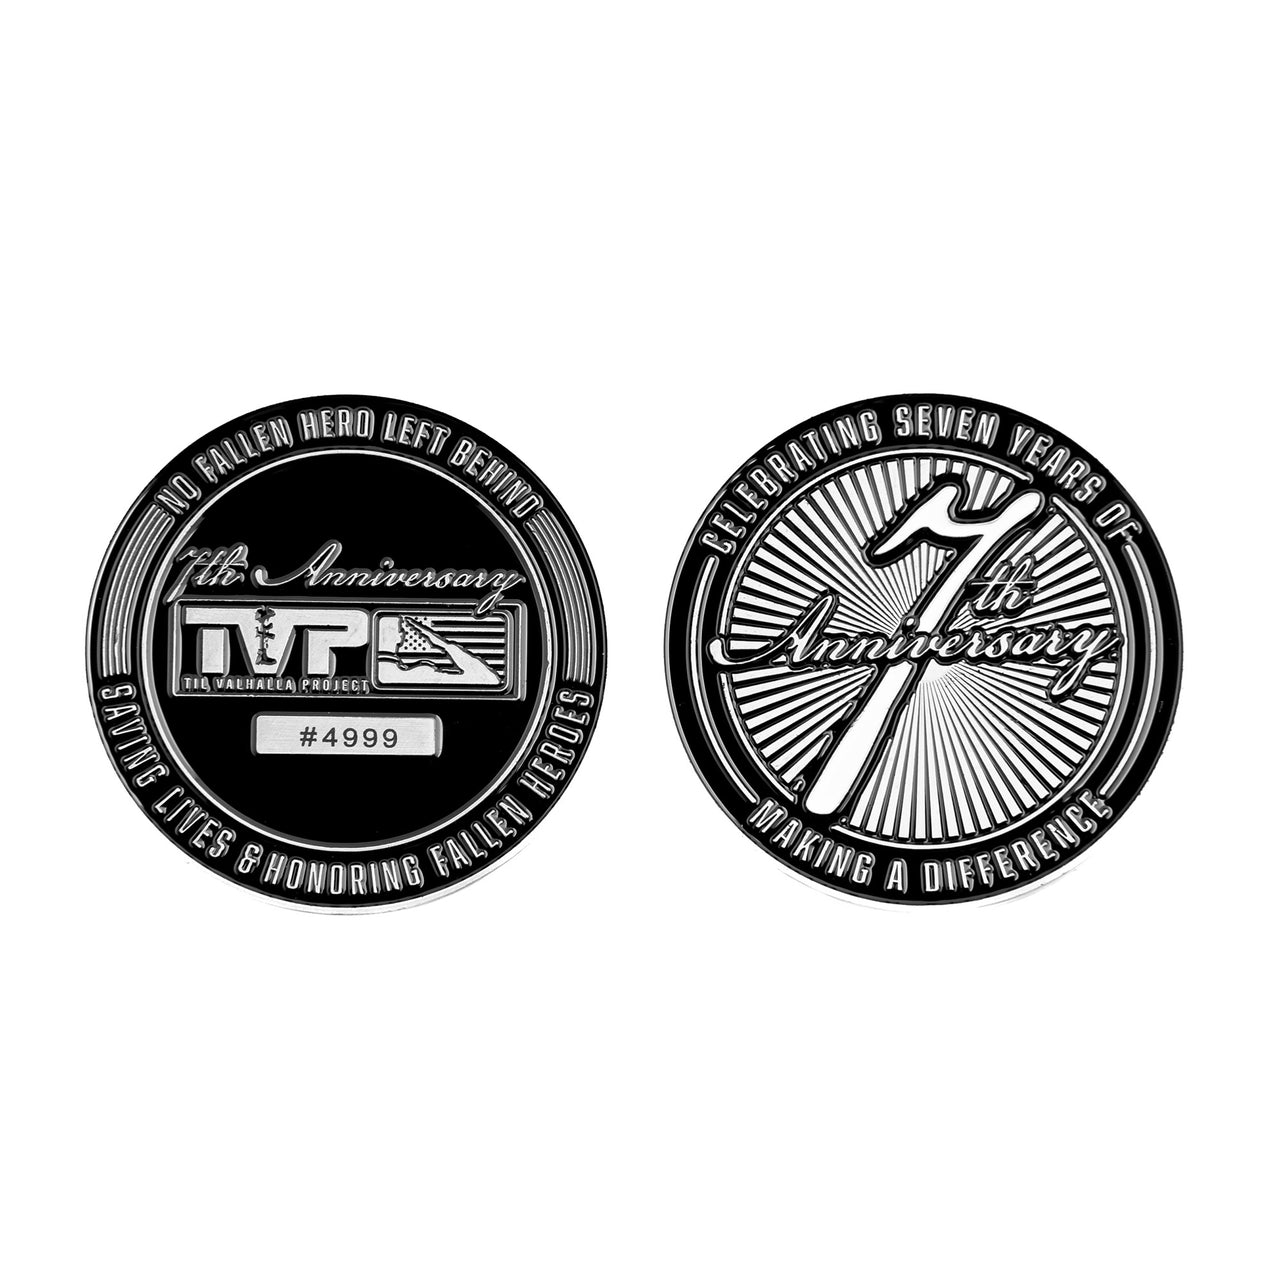 T.V.P. Challenge Coin - 7 Year Anniversary